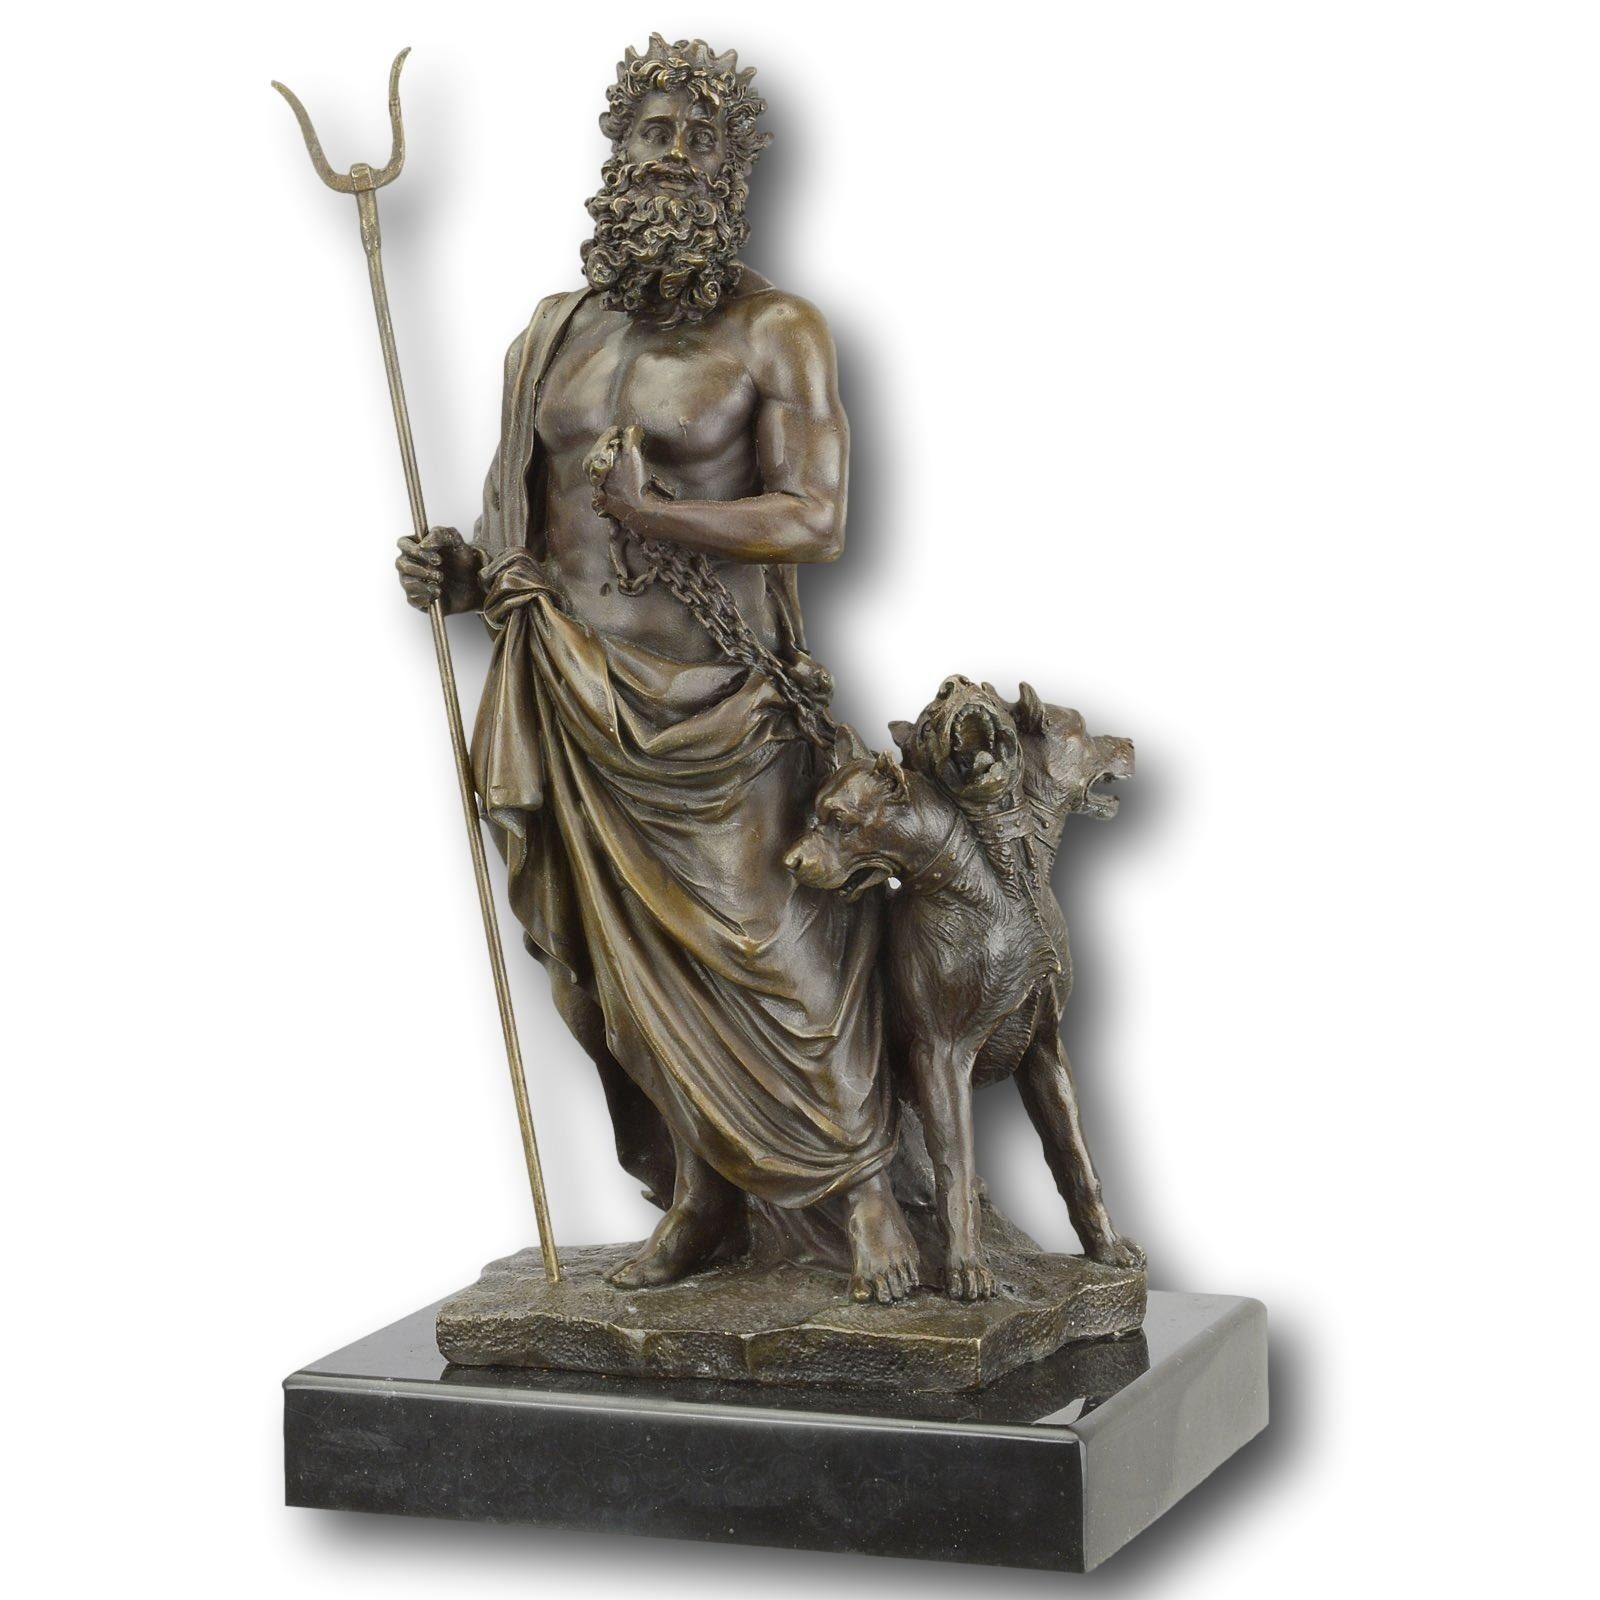 Aubaho Skulptur Bronzefigur Hades und Cerberus Gott Mythologie Bronze Skulptur Antik-S